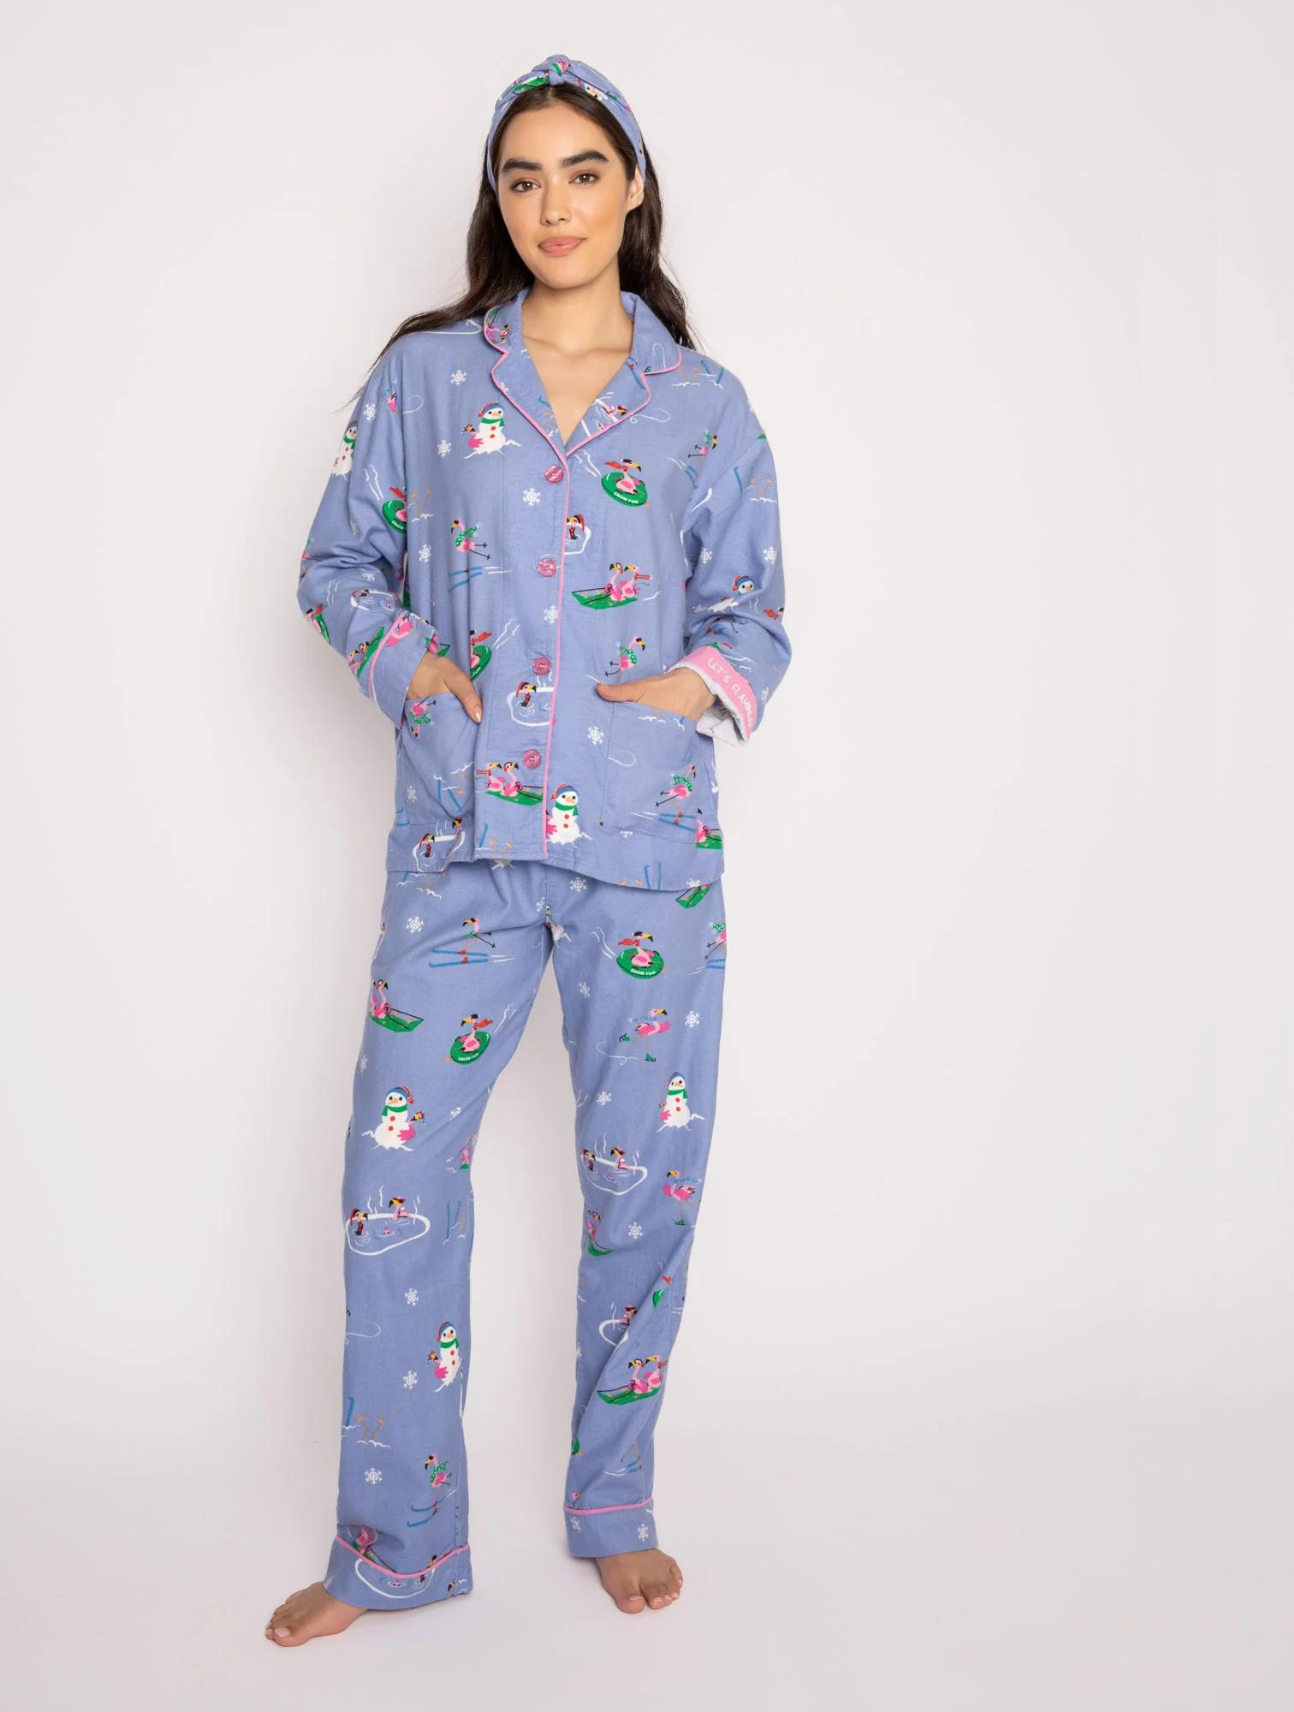 Flannel PJ Set